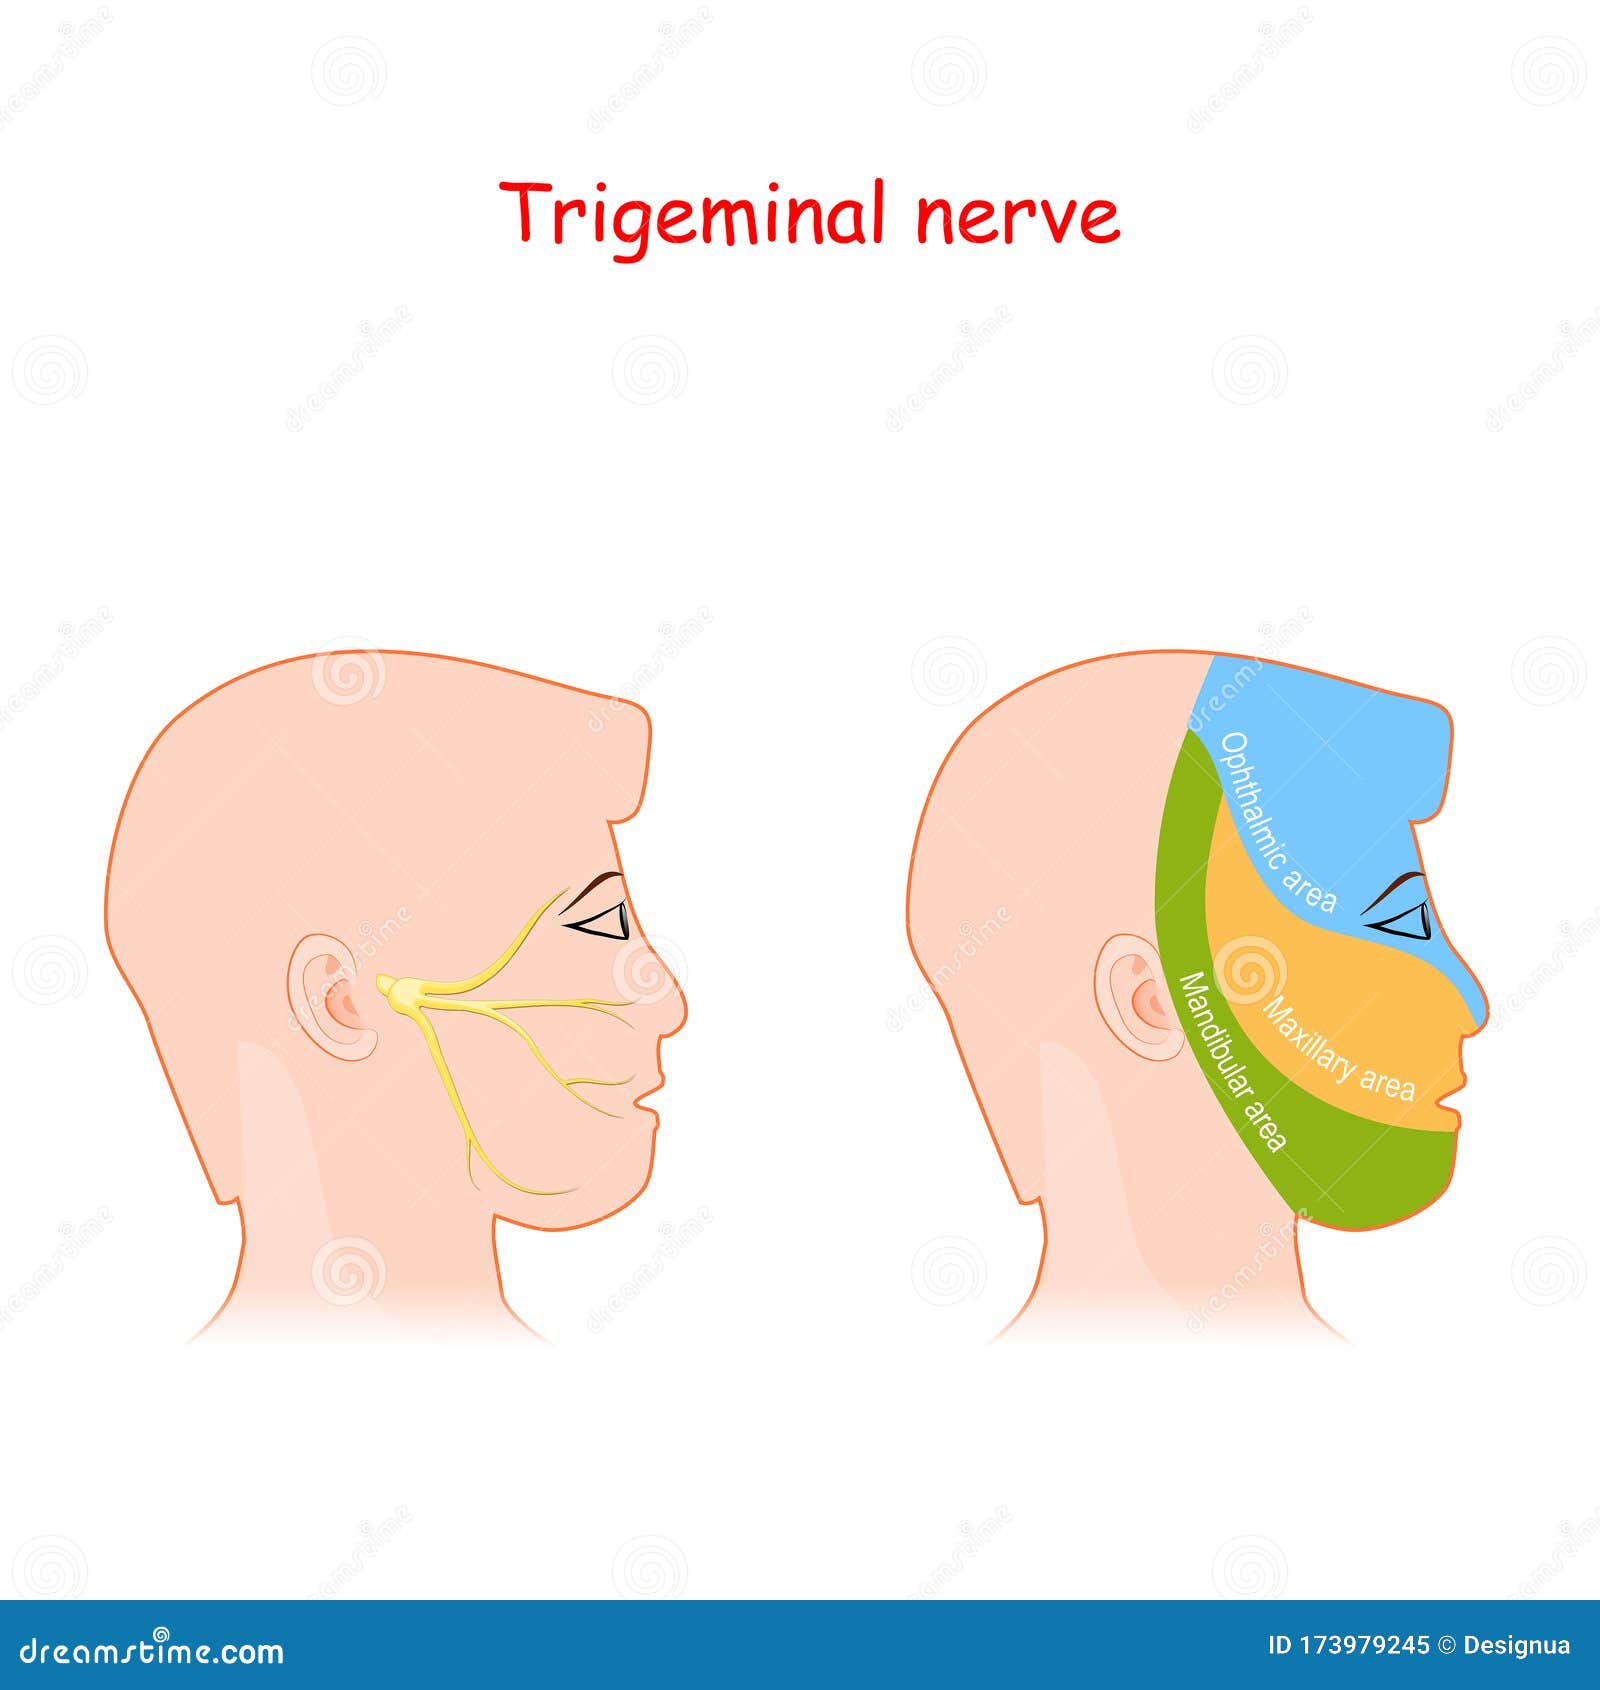 trigeminal nerve and main areas of innervation. head neurology scheme